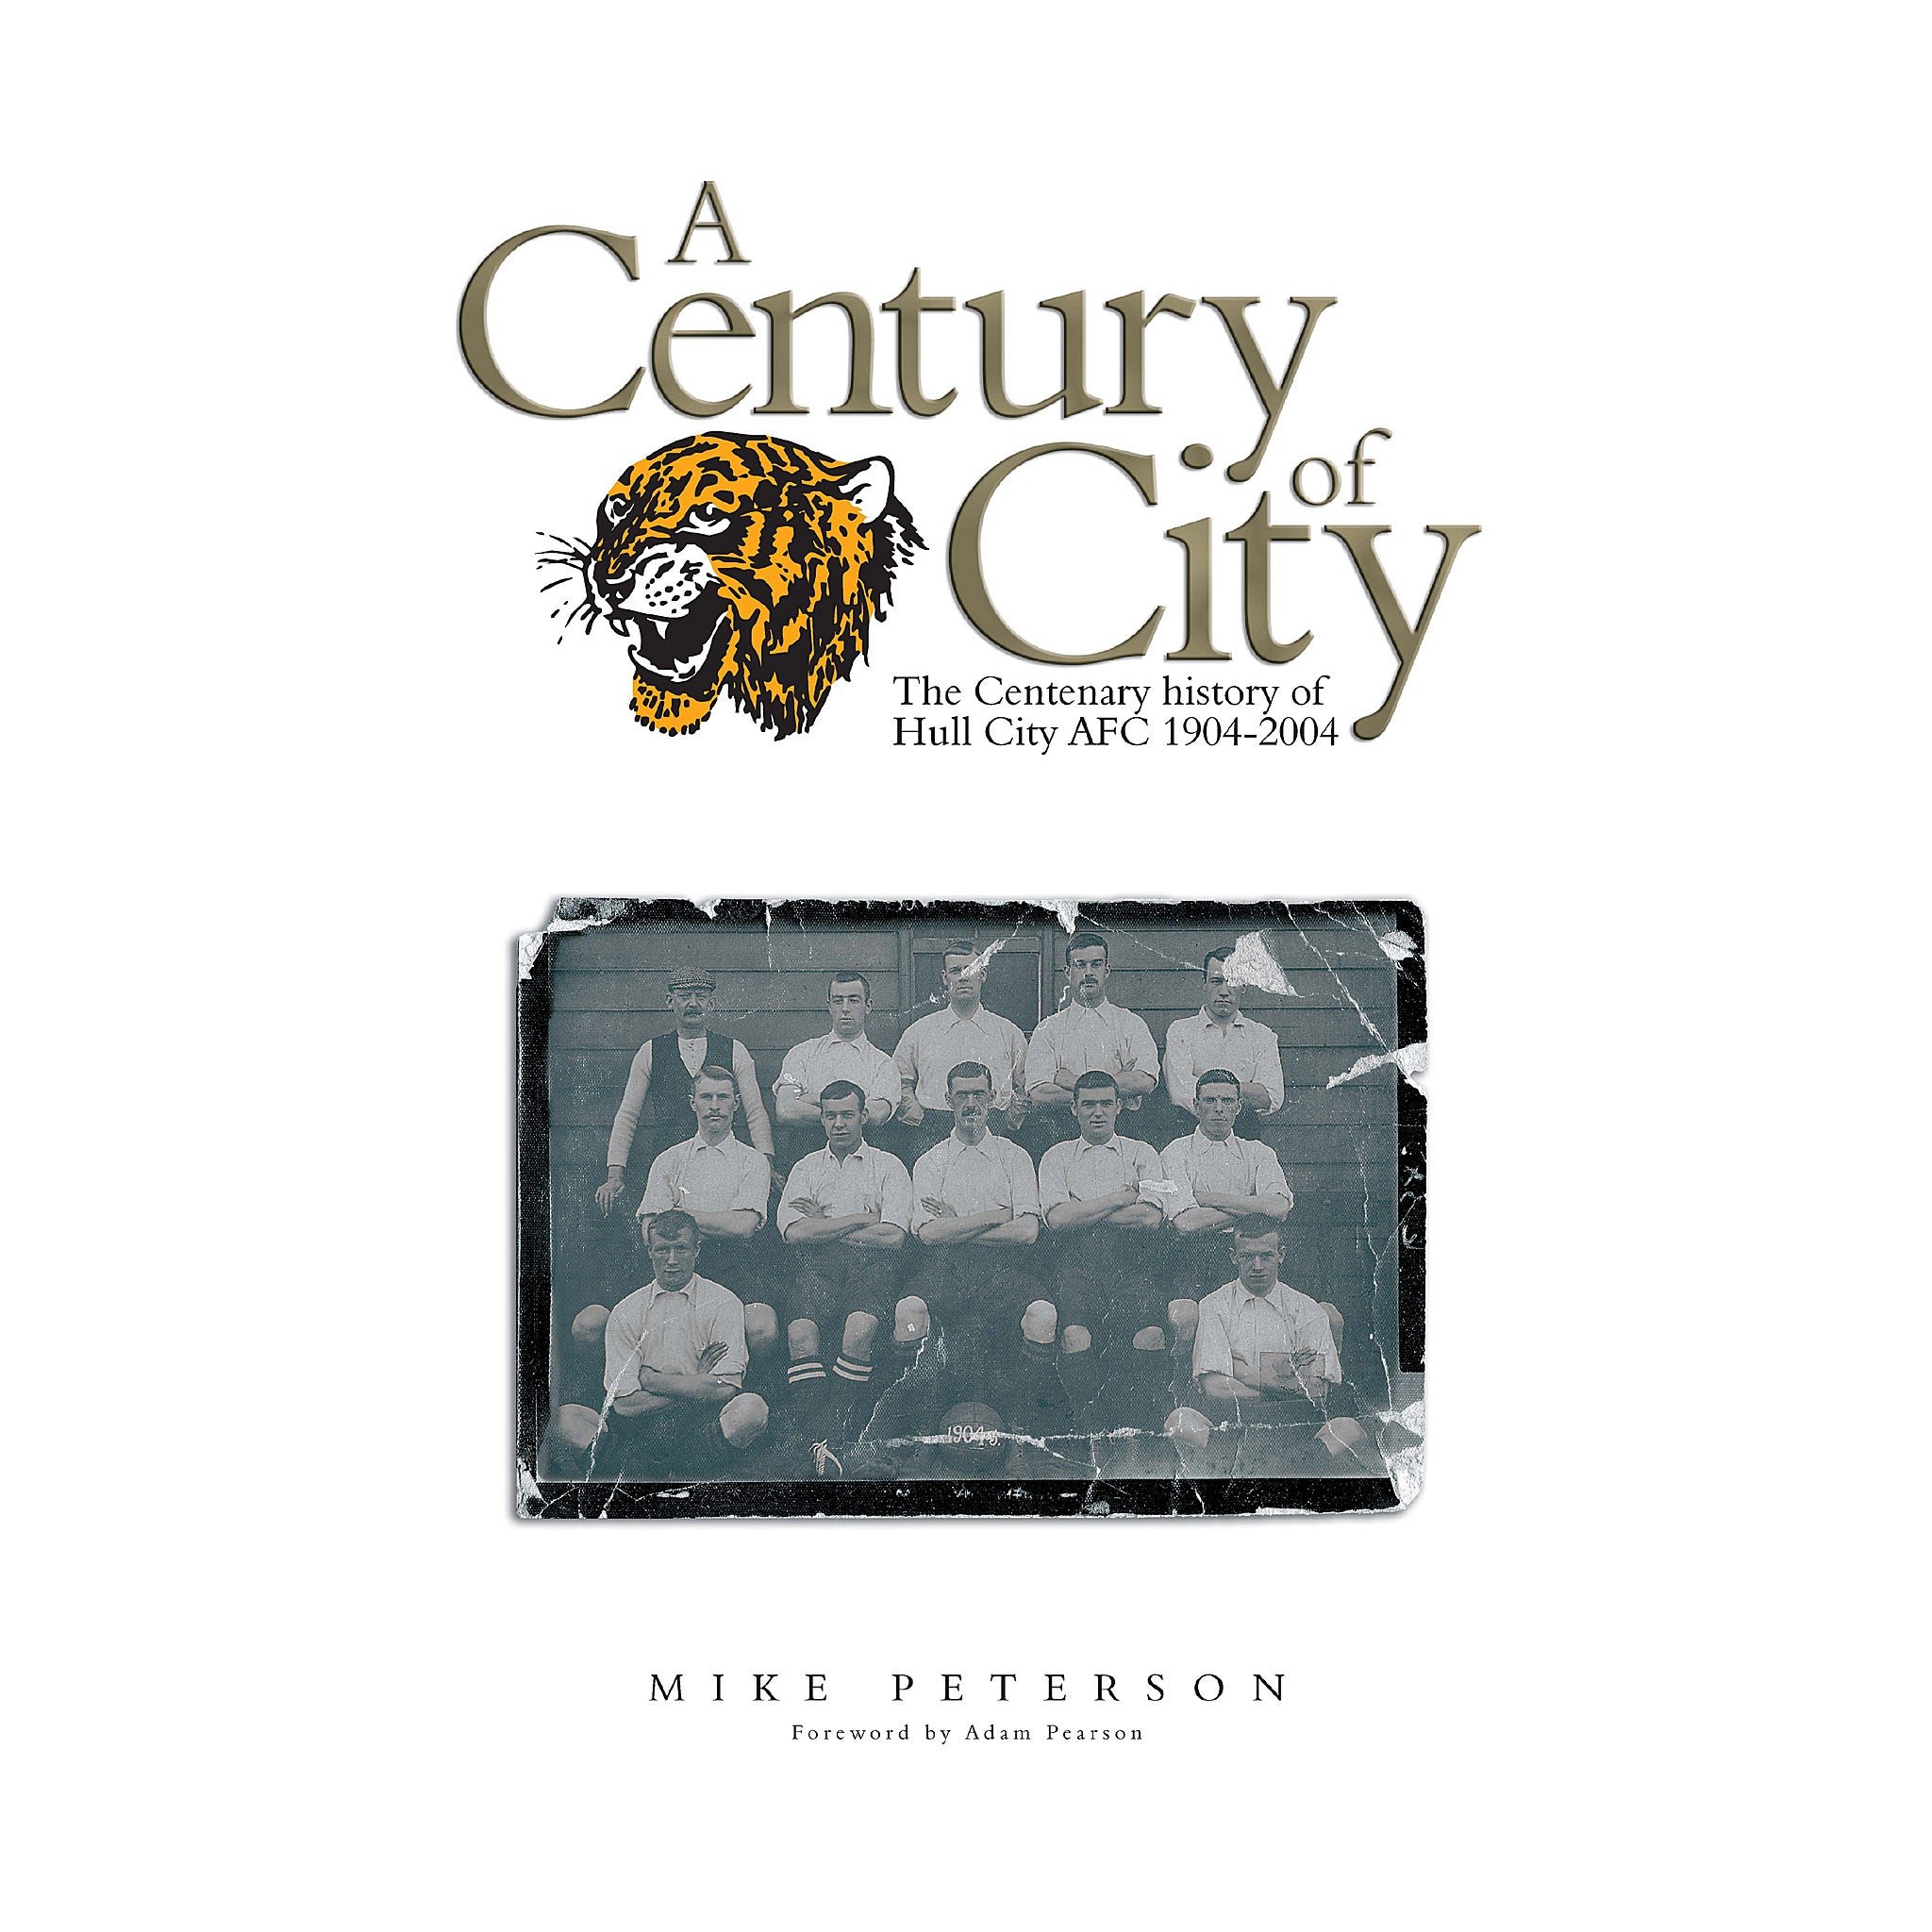 A Century of City – The Centenary History of Hull City AFC 1904-2004